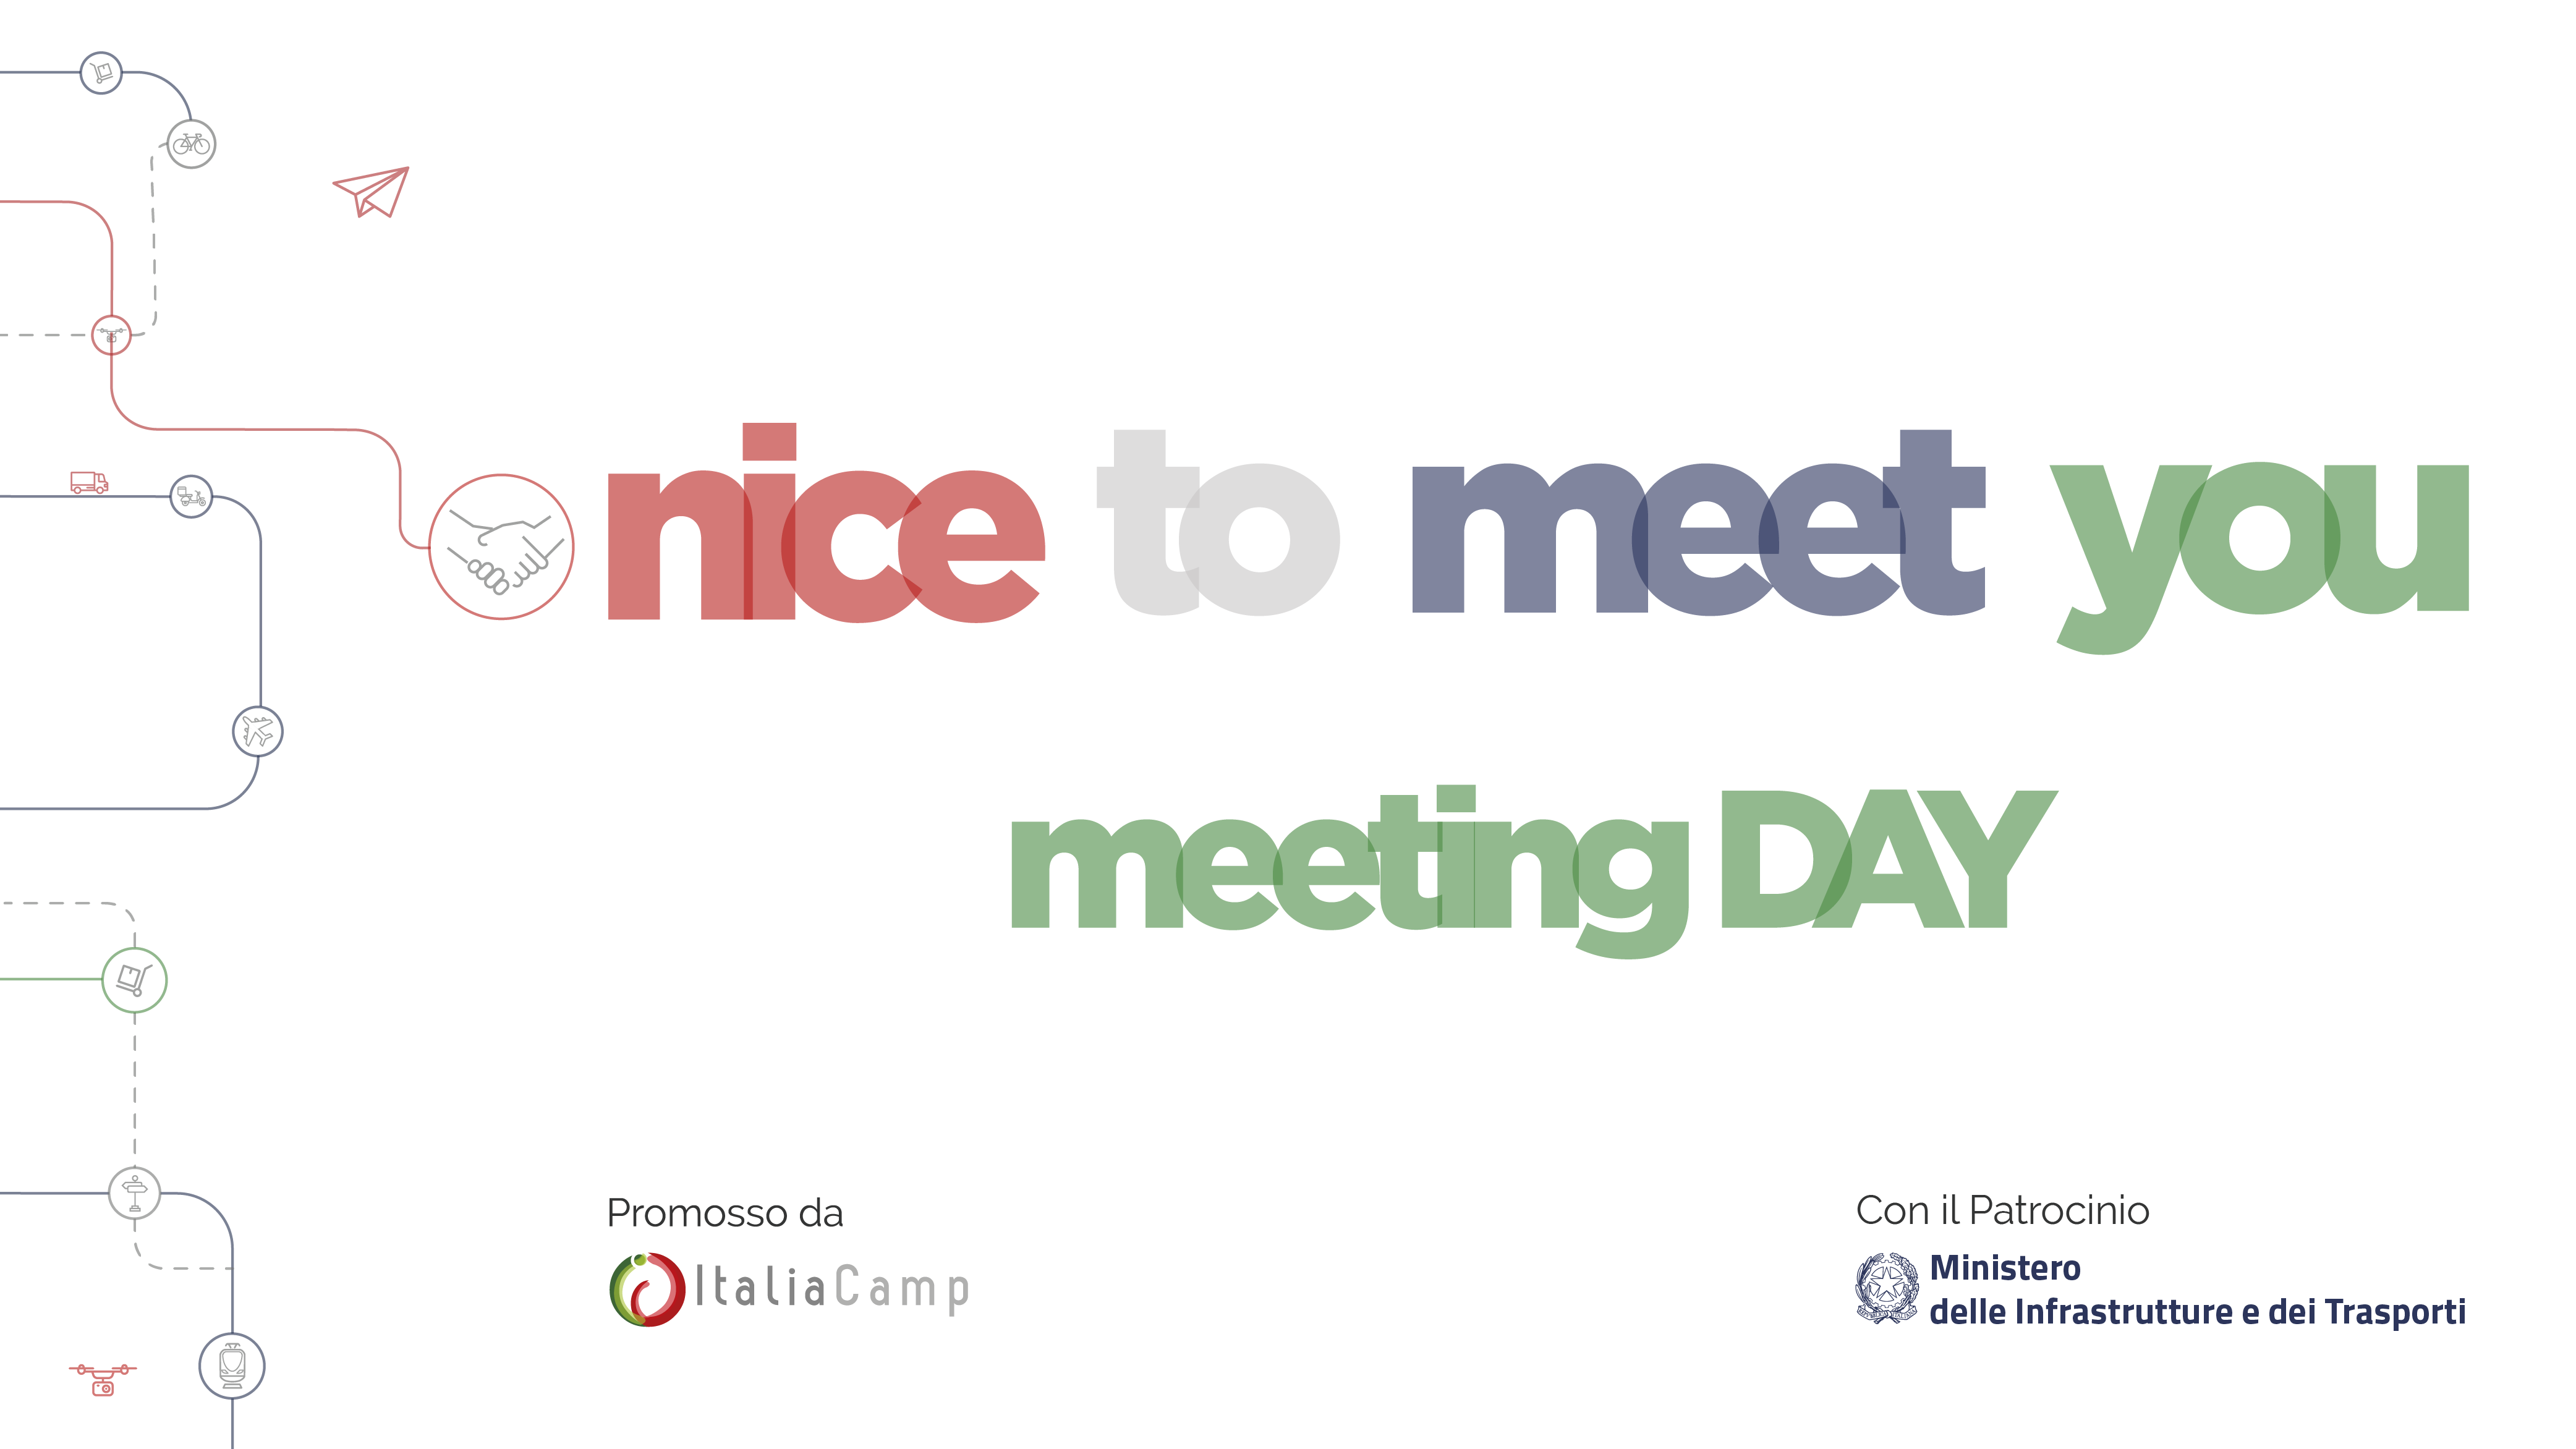 Nice to meet you meeting day